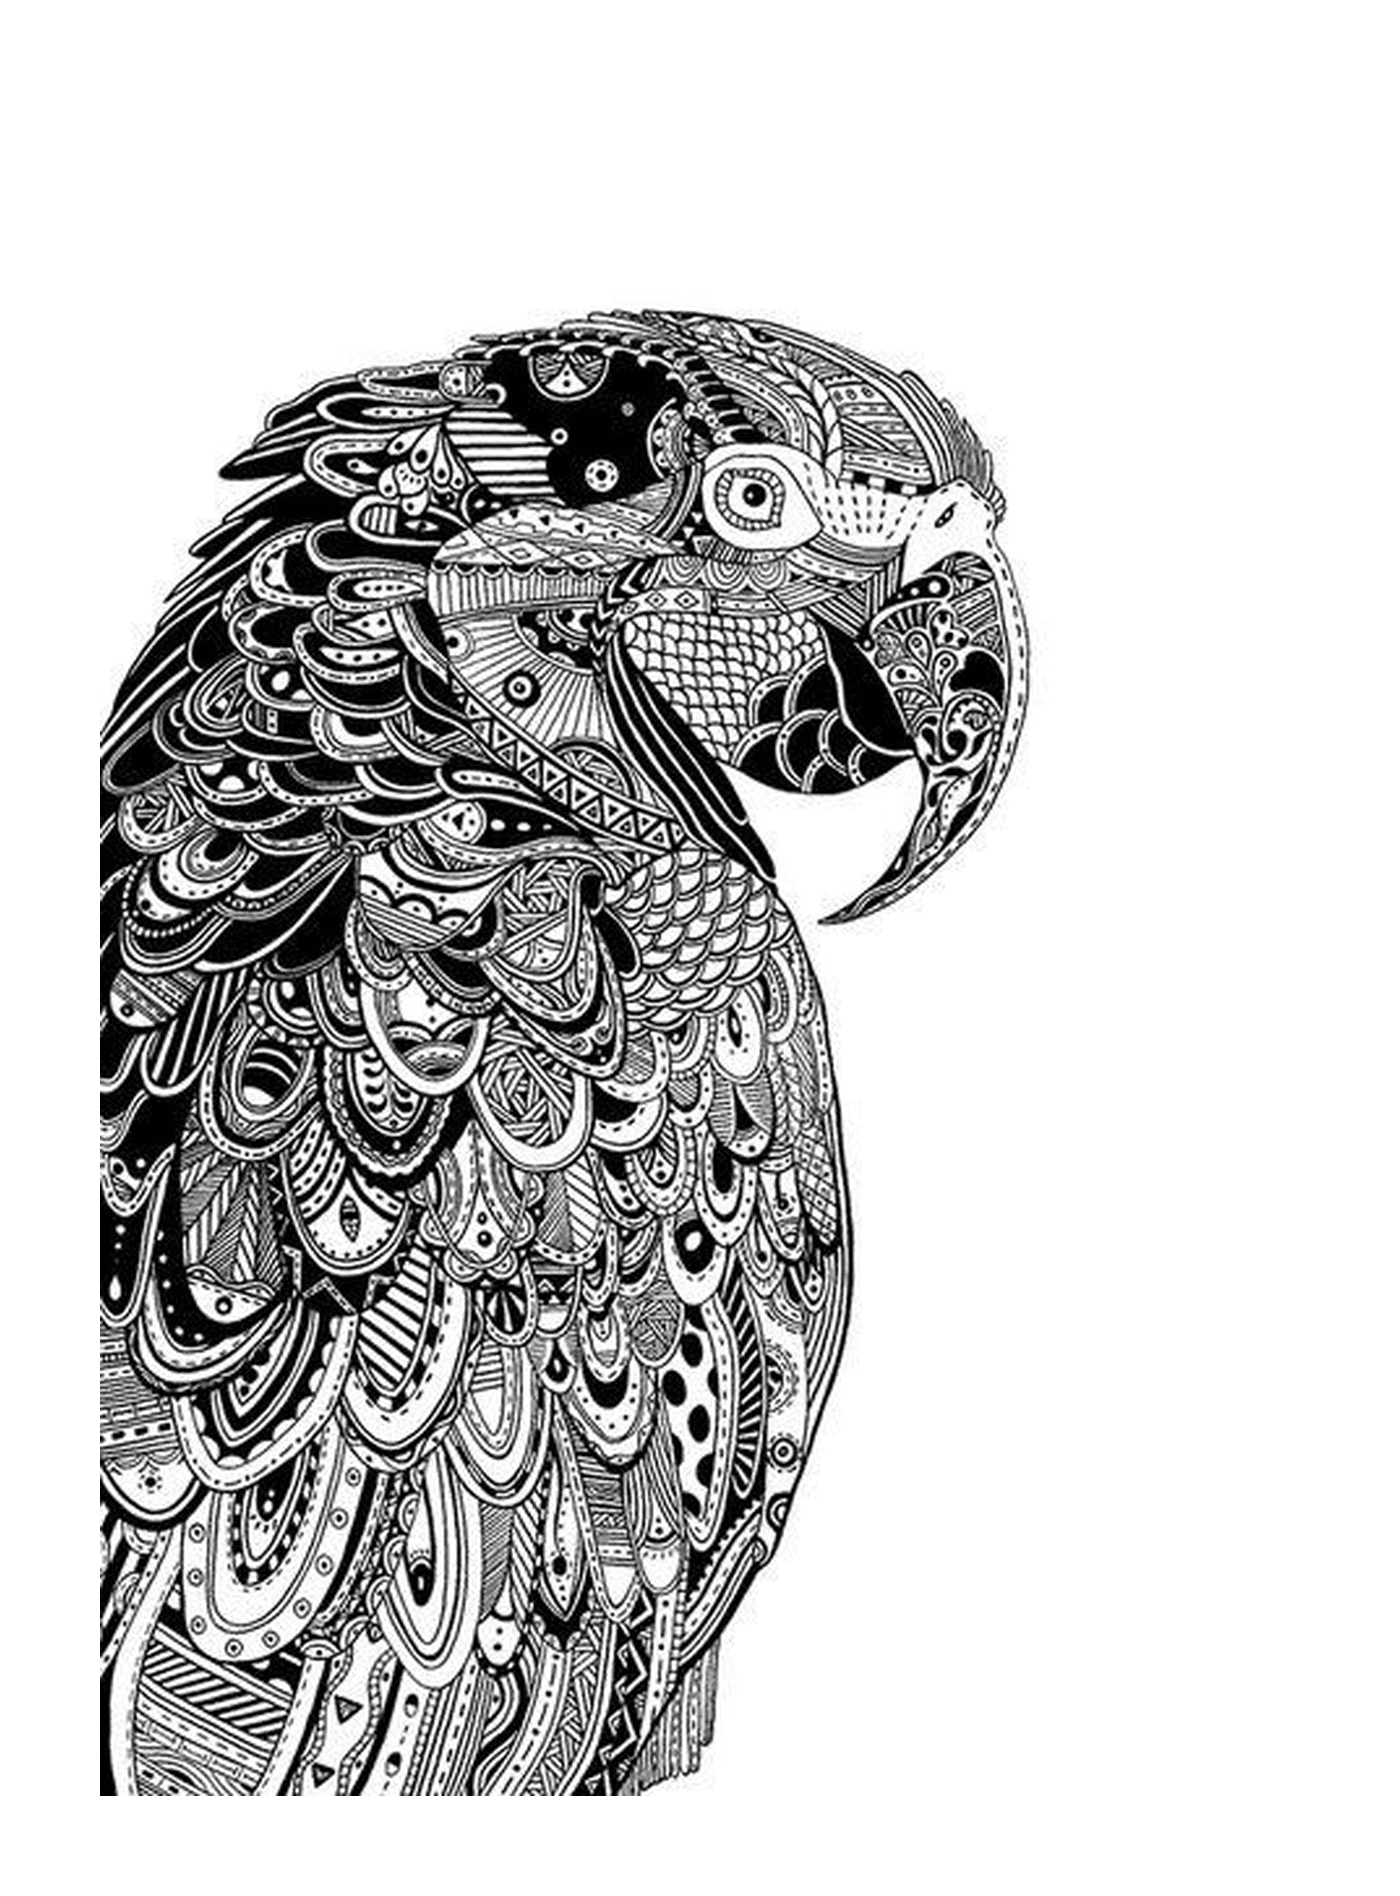  Parrot with complex motifs 